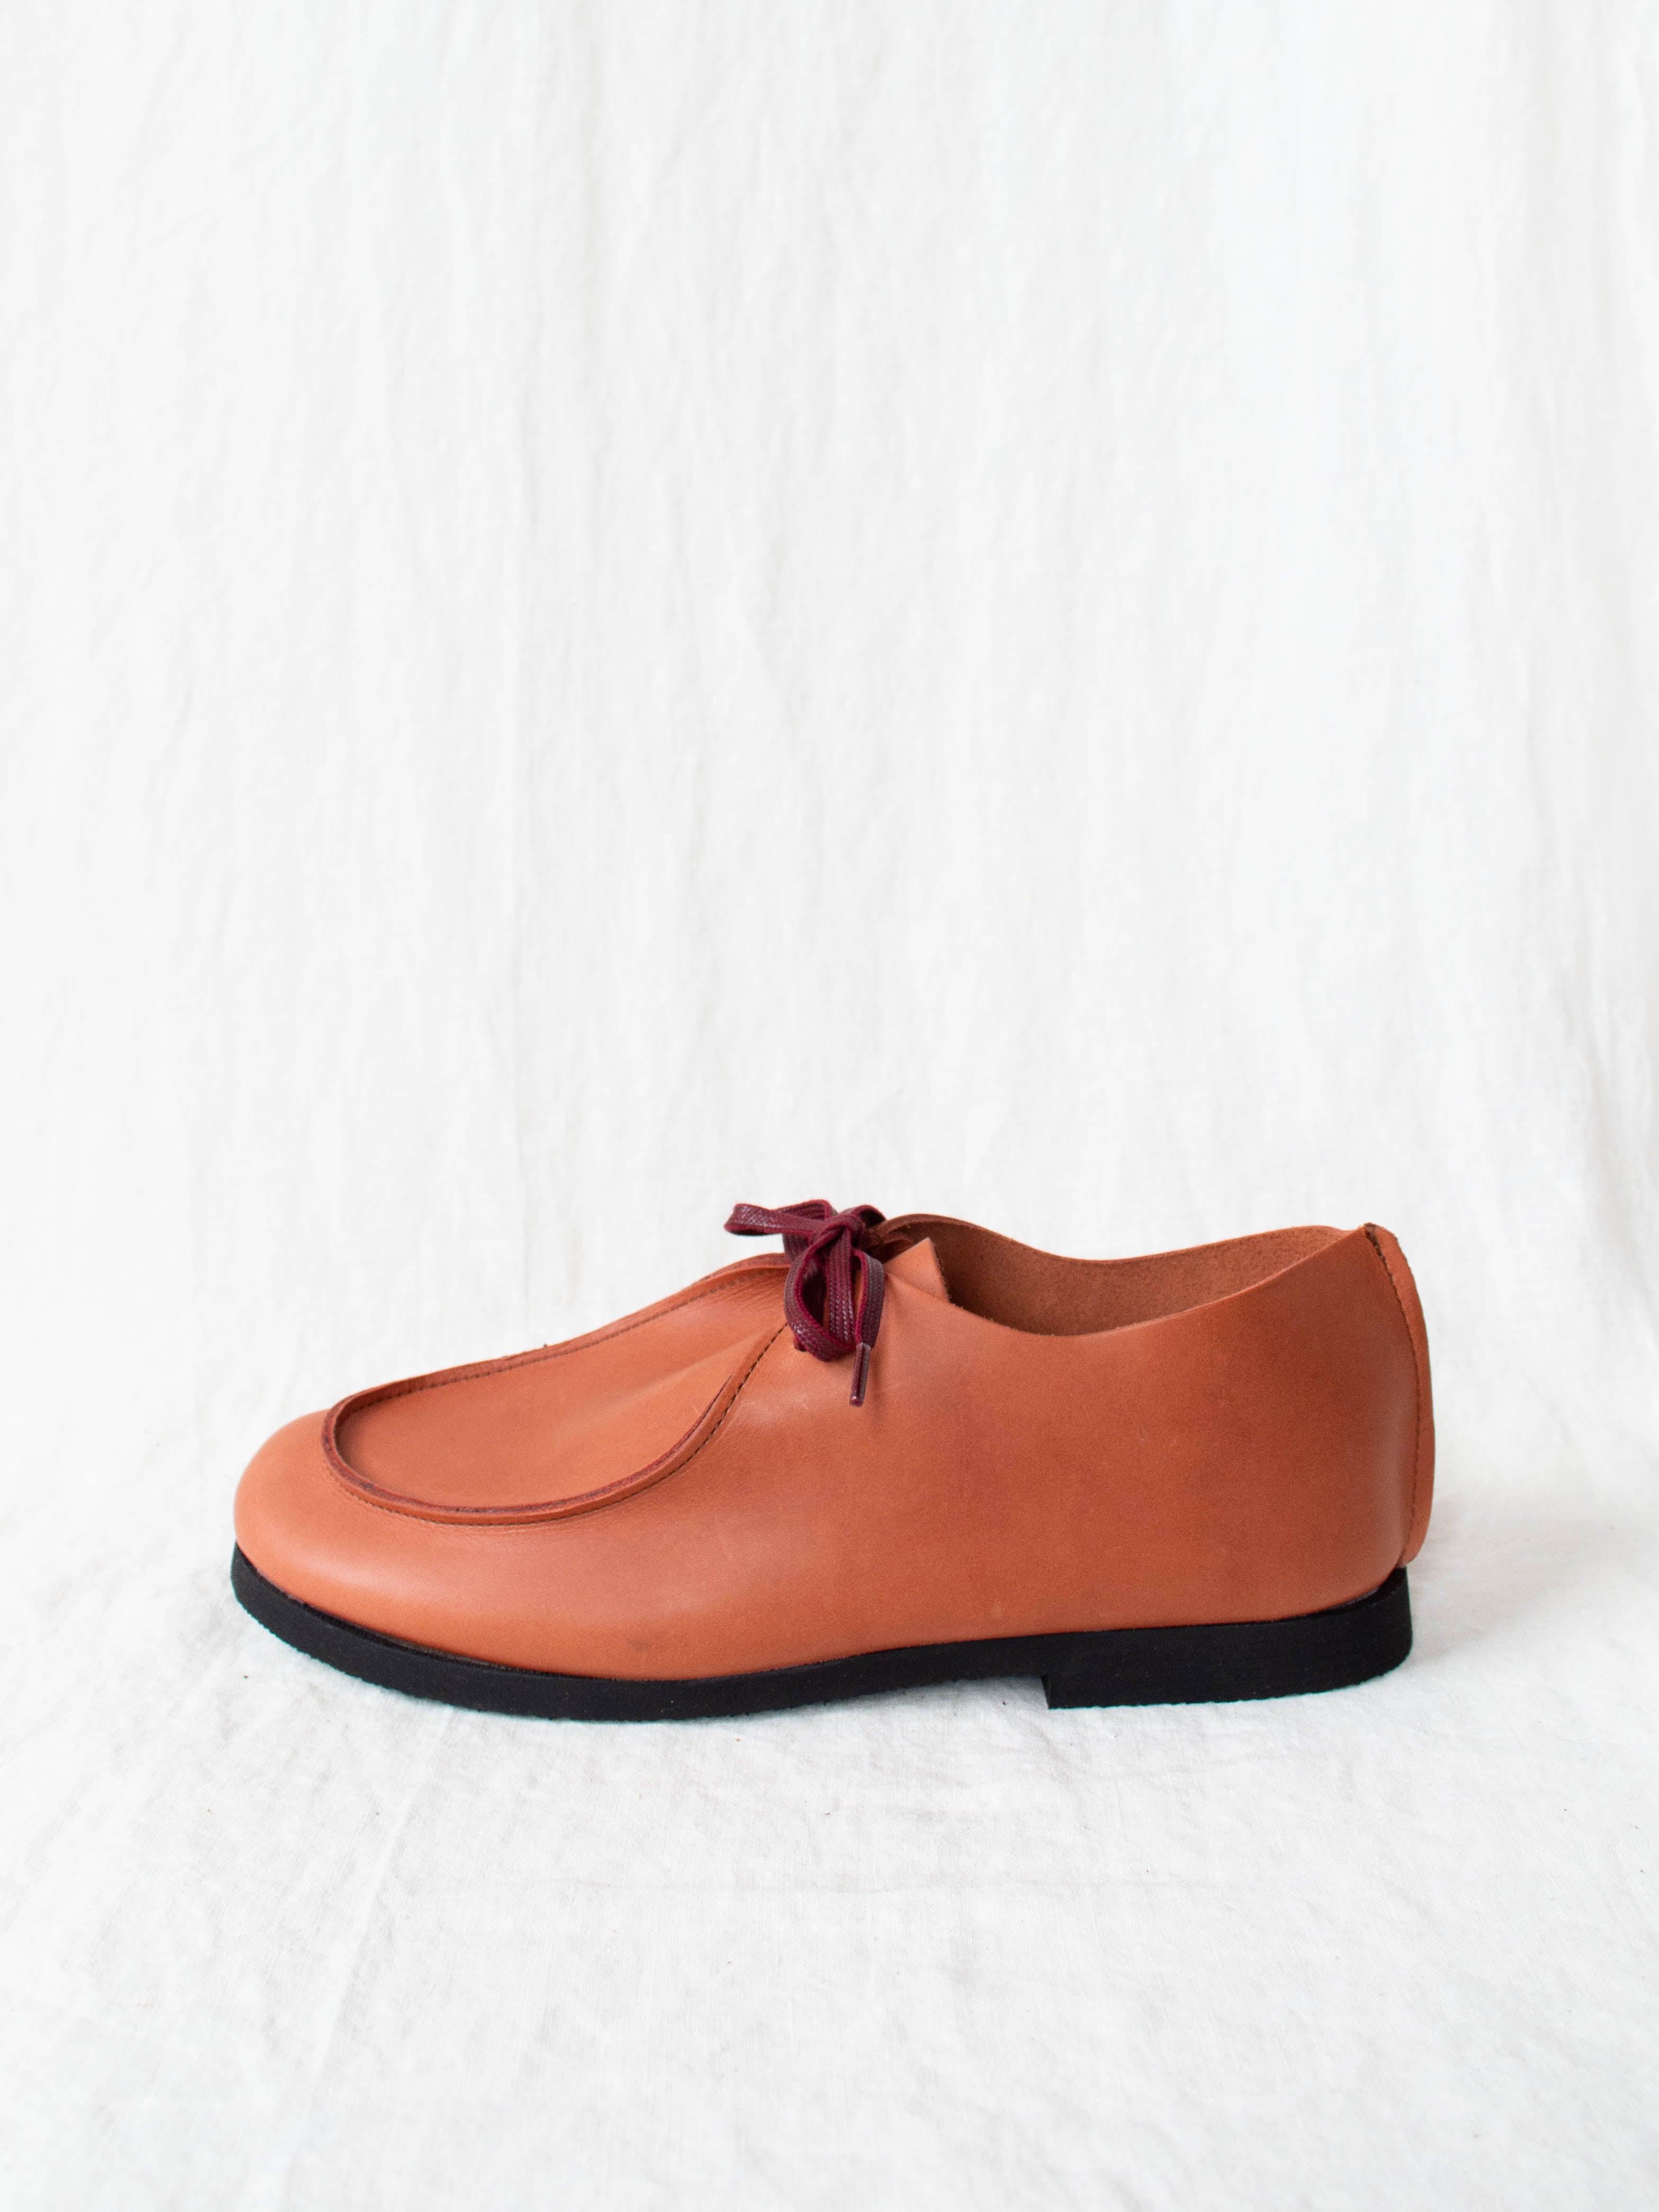 Namu Shop - Kojima Shoemakers Todd - Red Brown